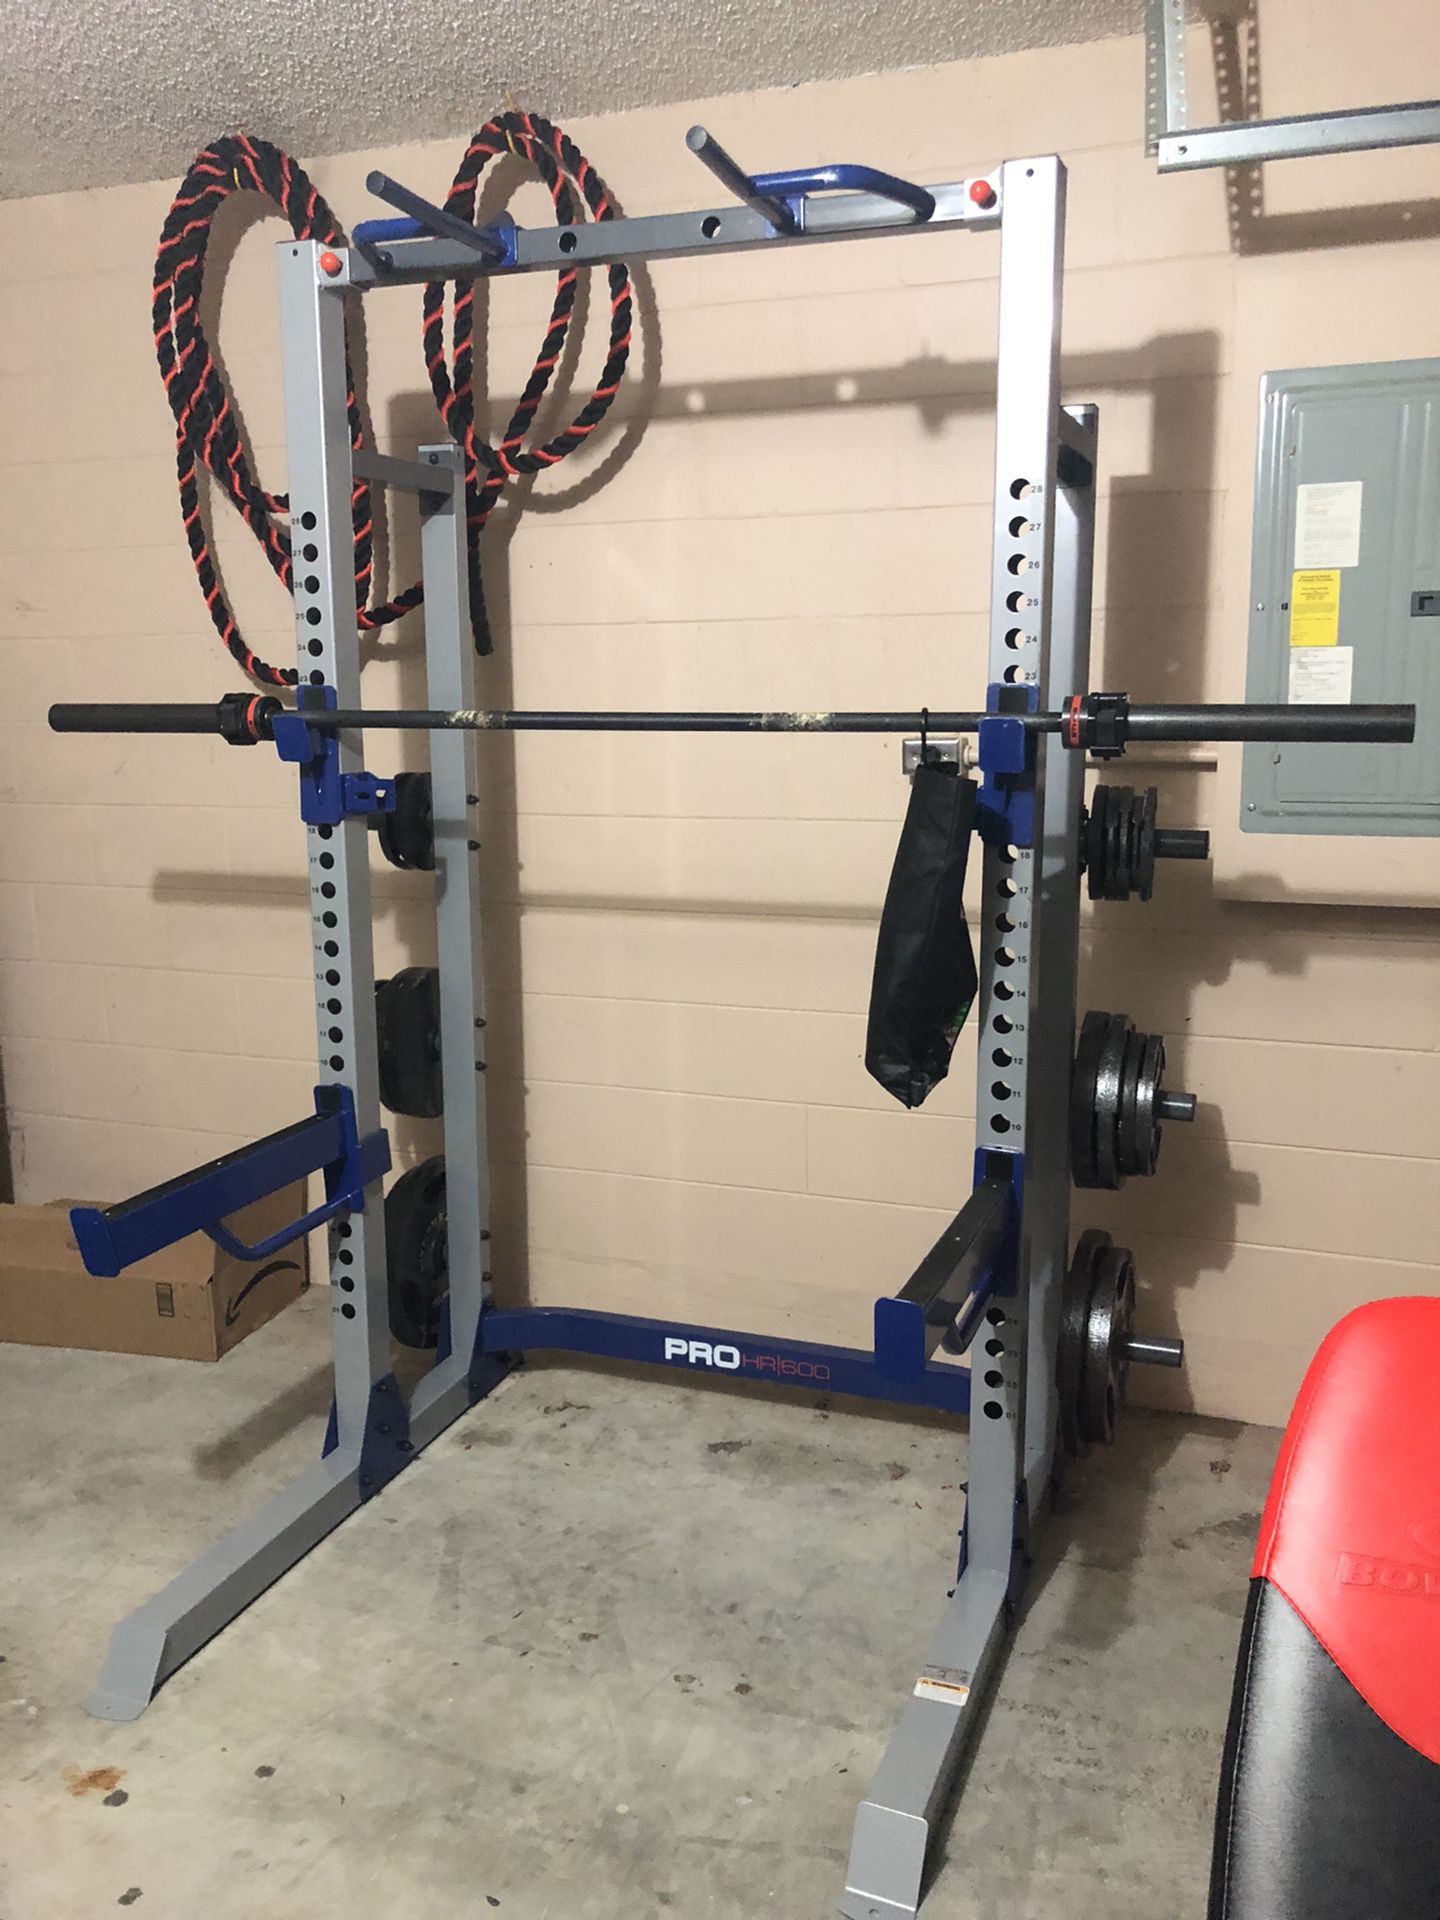 Cross fit equipment, gym equipment, power lifting rack